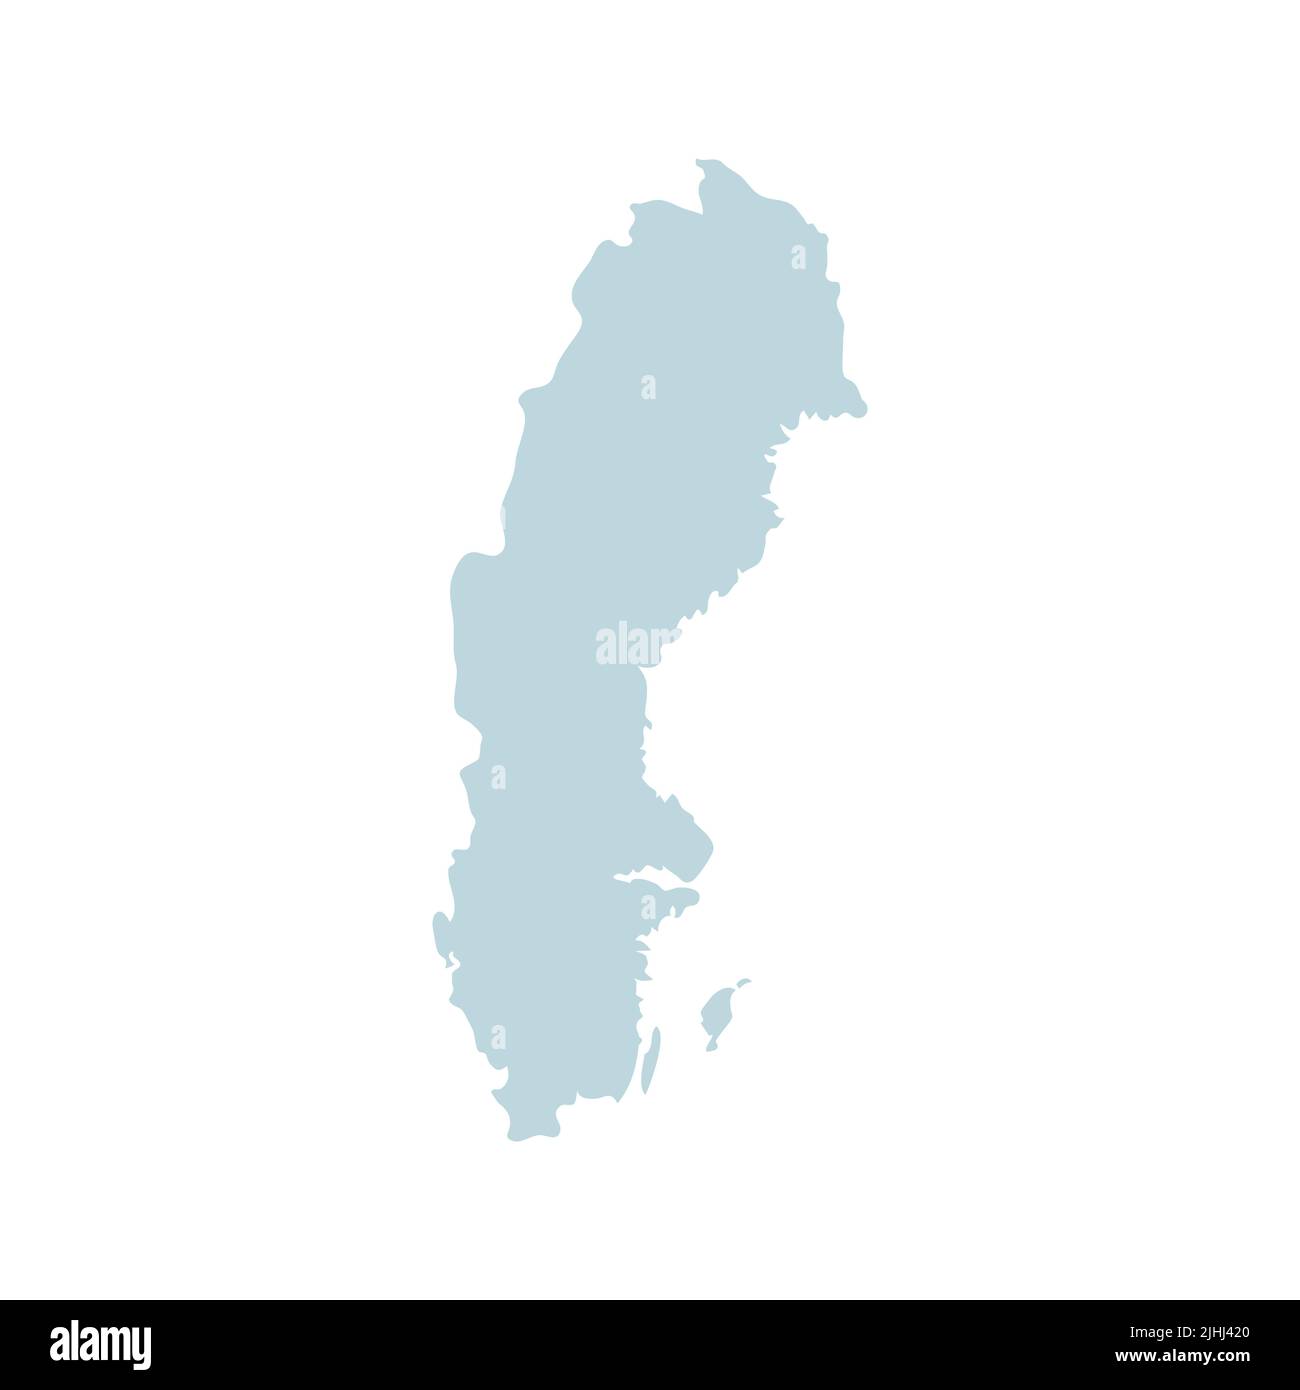 Map of Sweden vector illustration Stock Vector